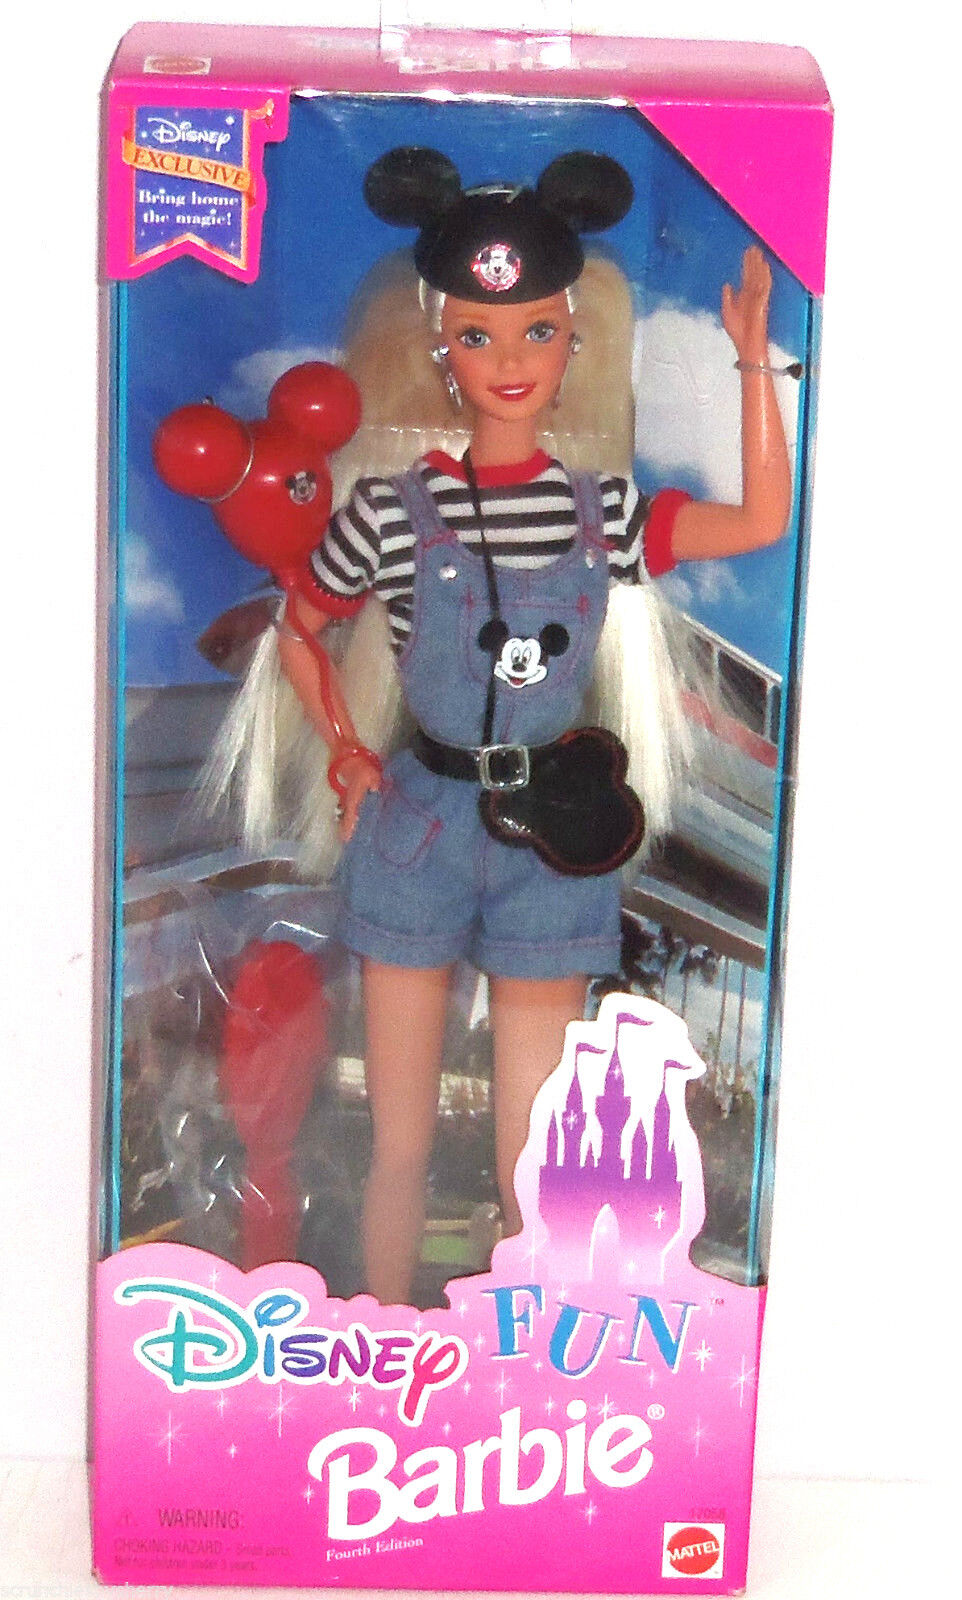 Disney Fun Barbie Doll Special Fourth Edition NRFB Mickey Mouse